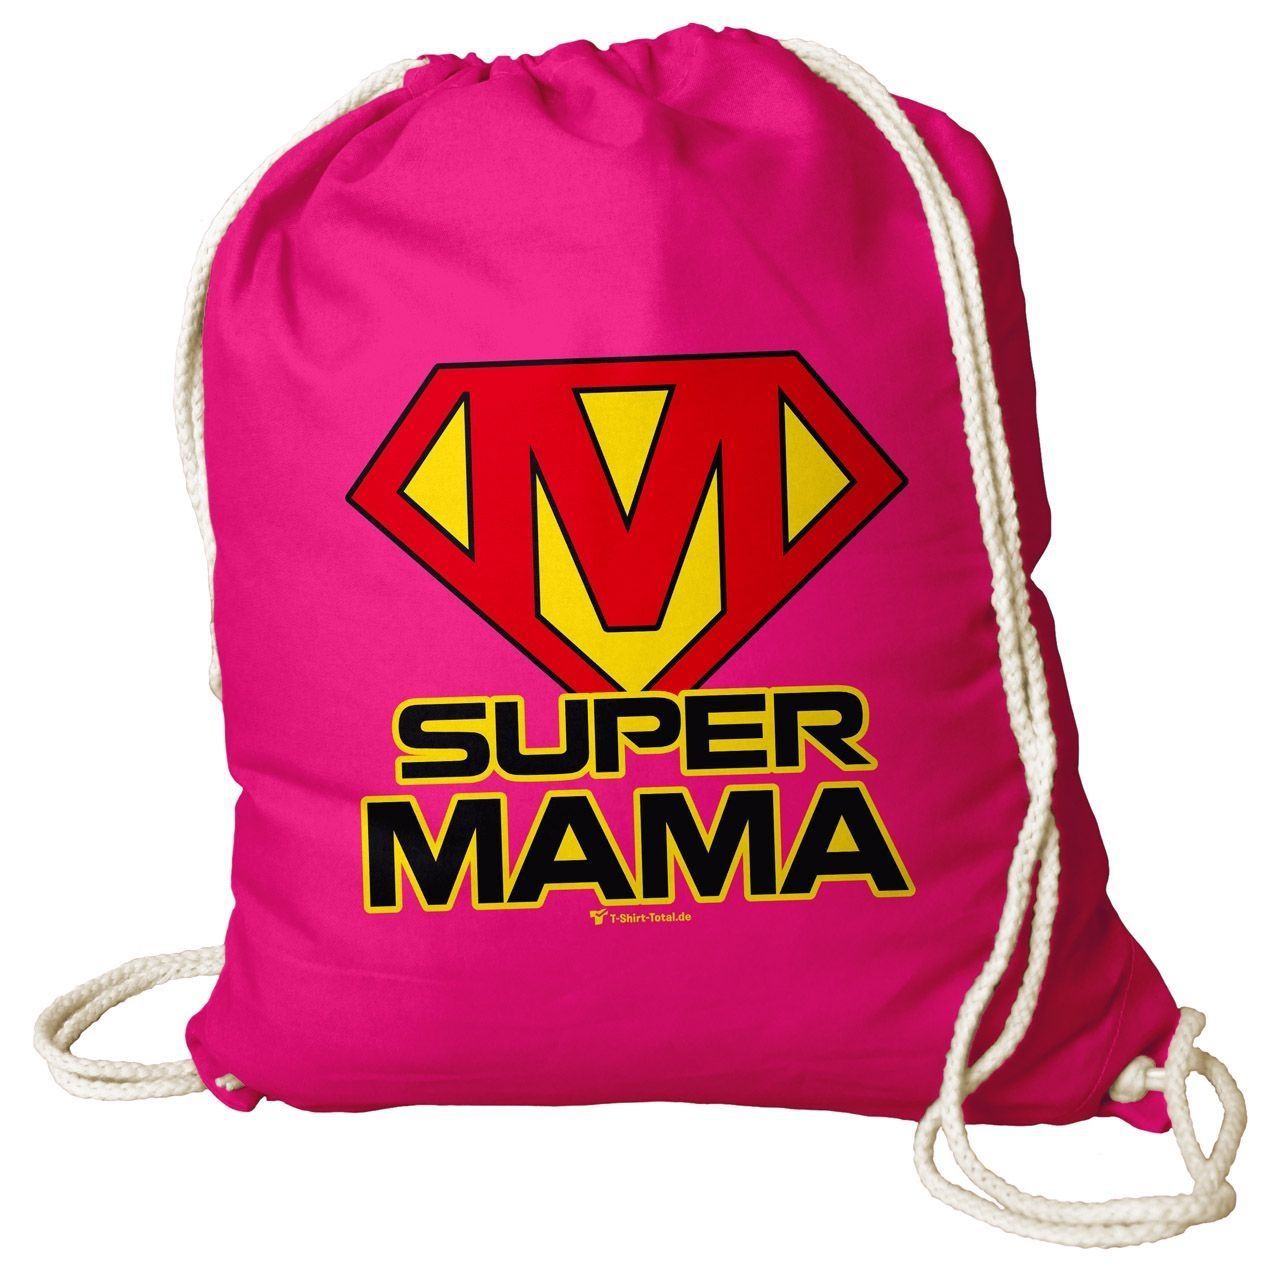 Super Mama Rucksack Beutel pink